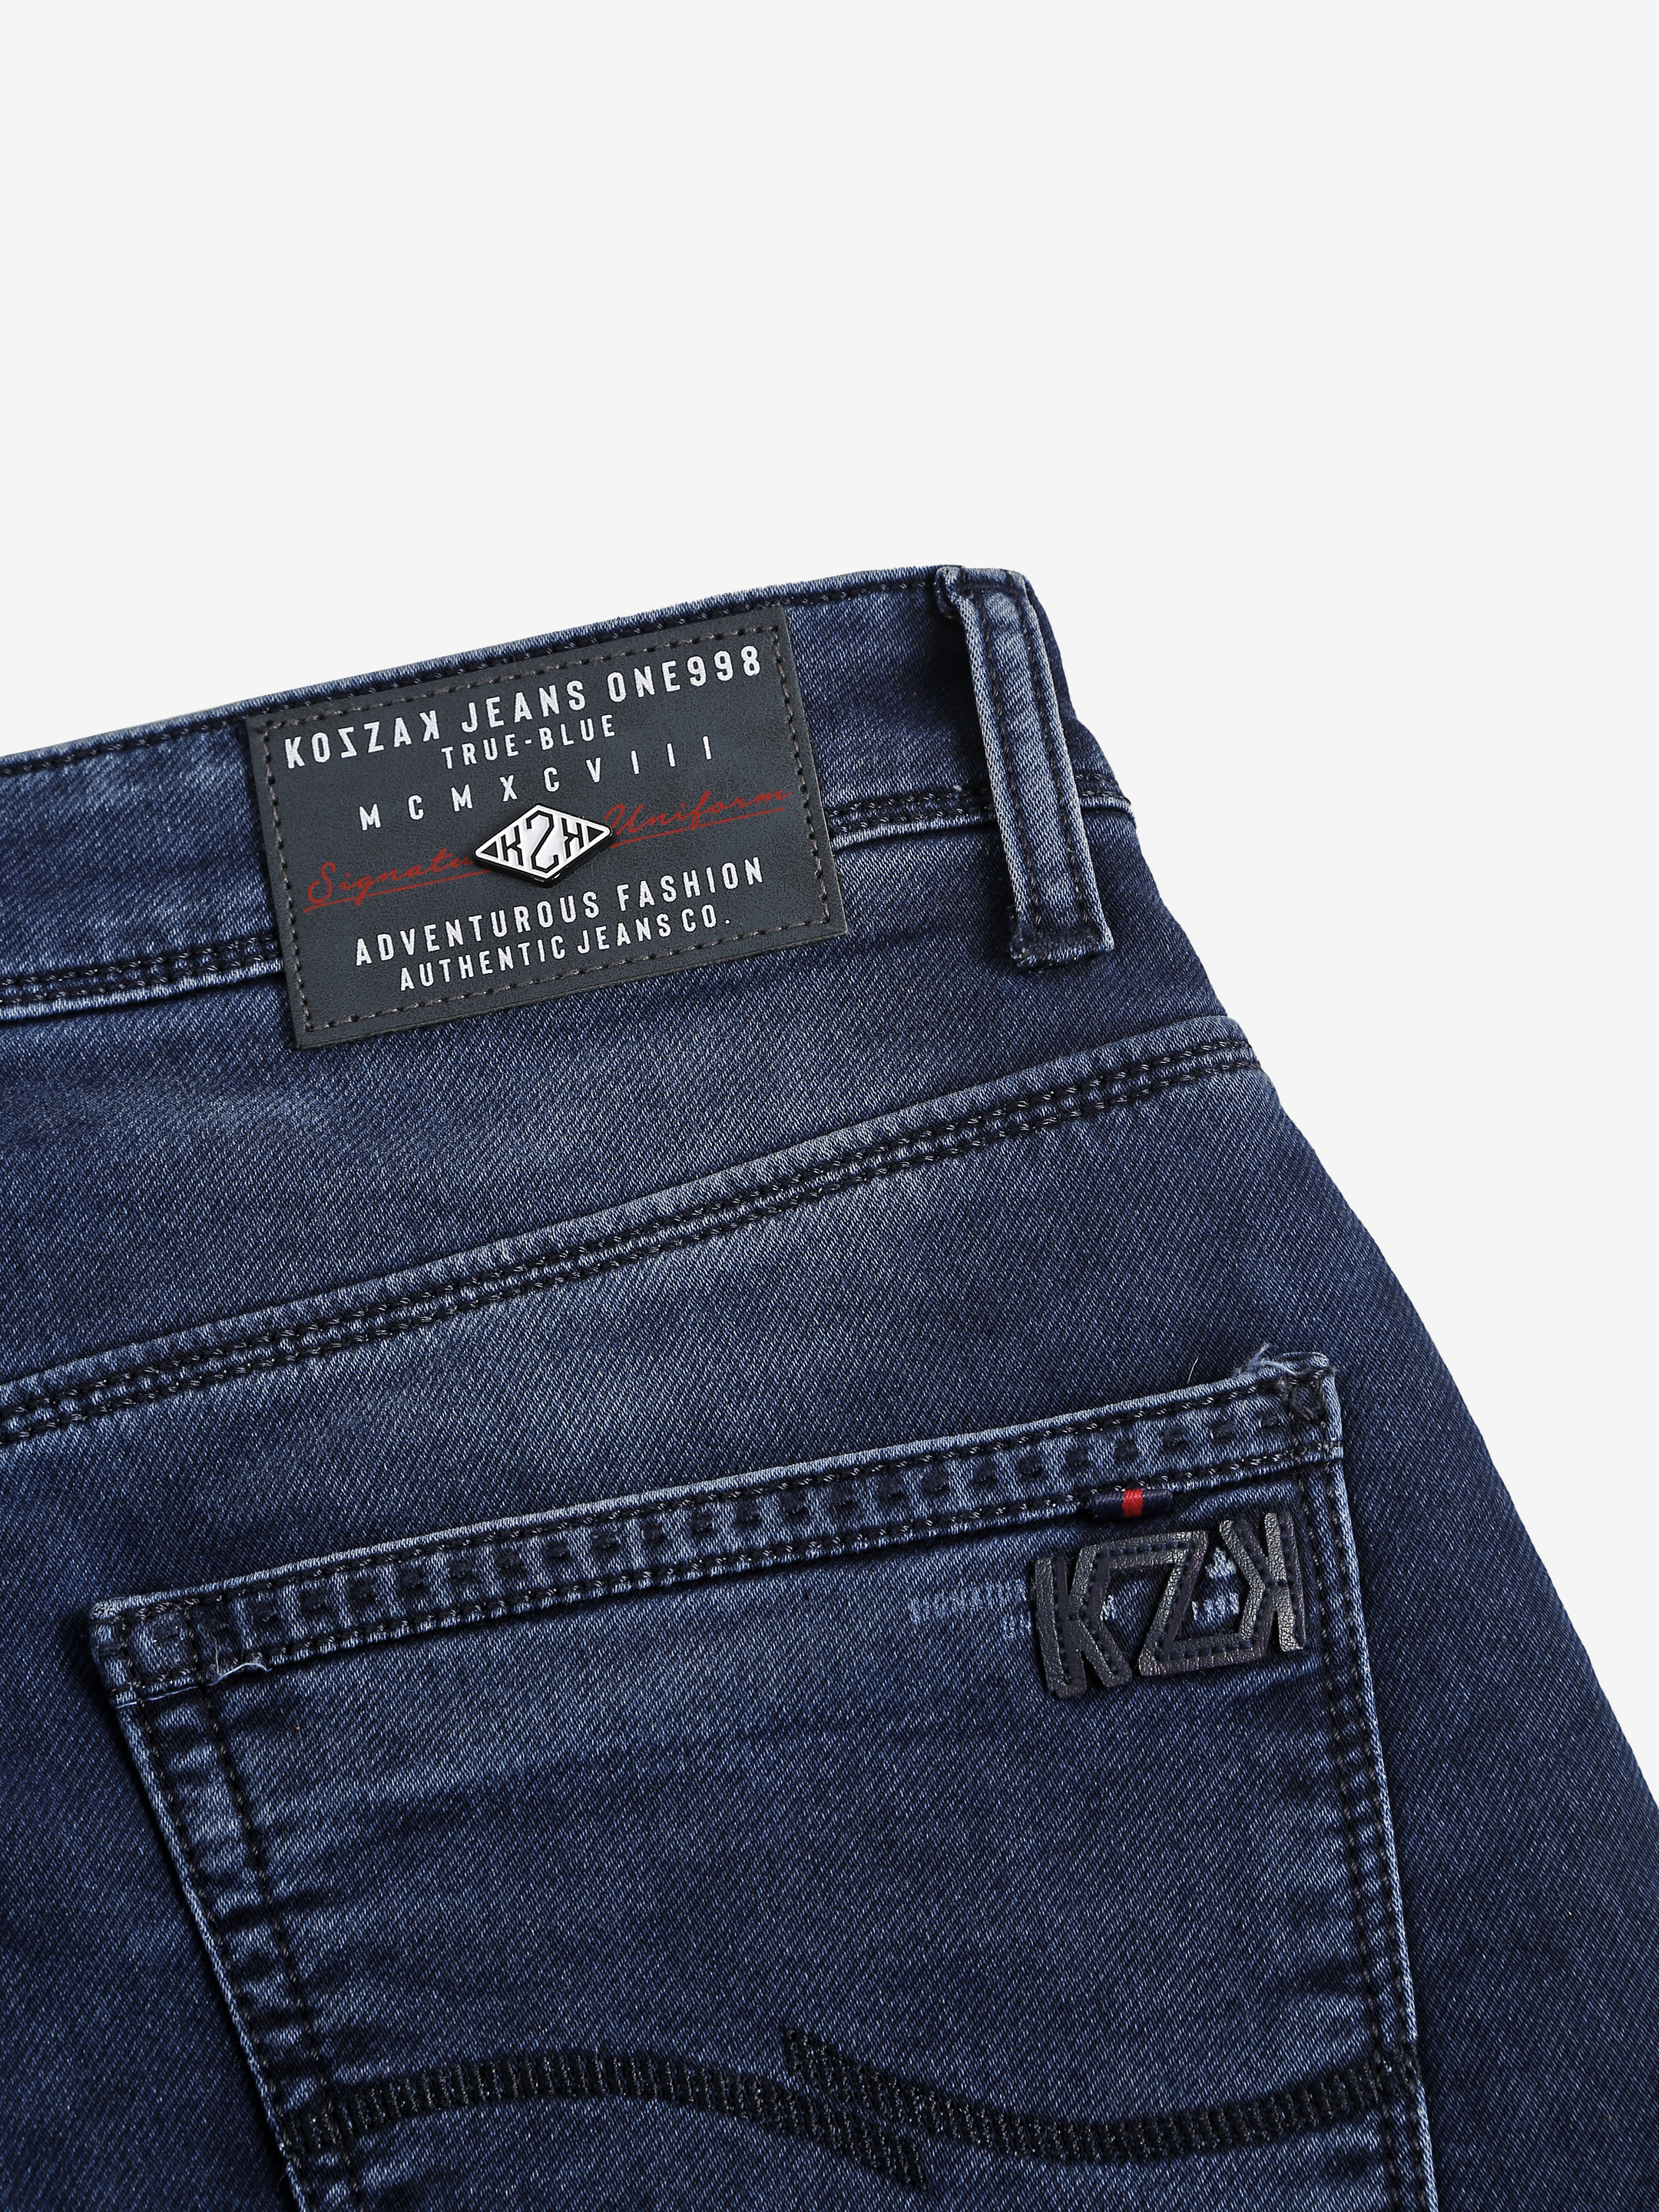 Kozzak slim fit washed dark blue jeans - G3-MJE4781